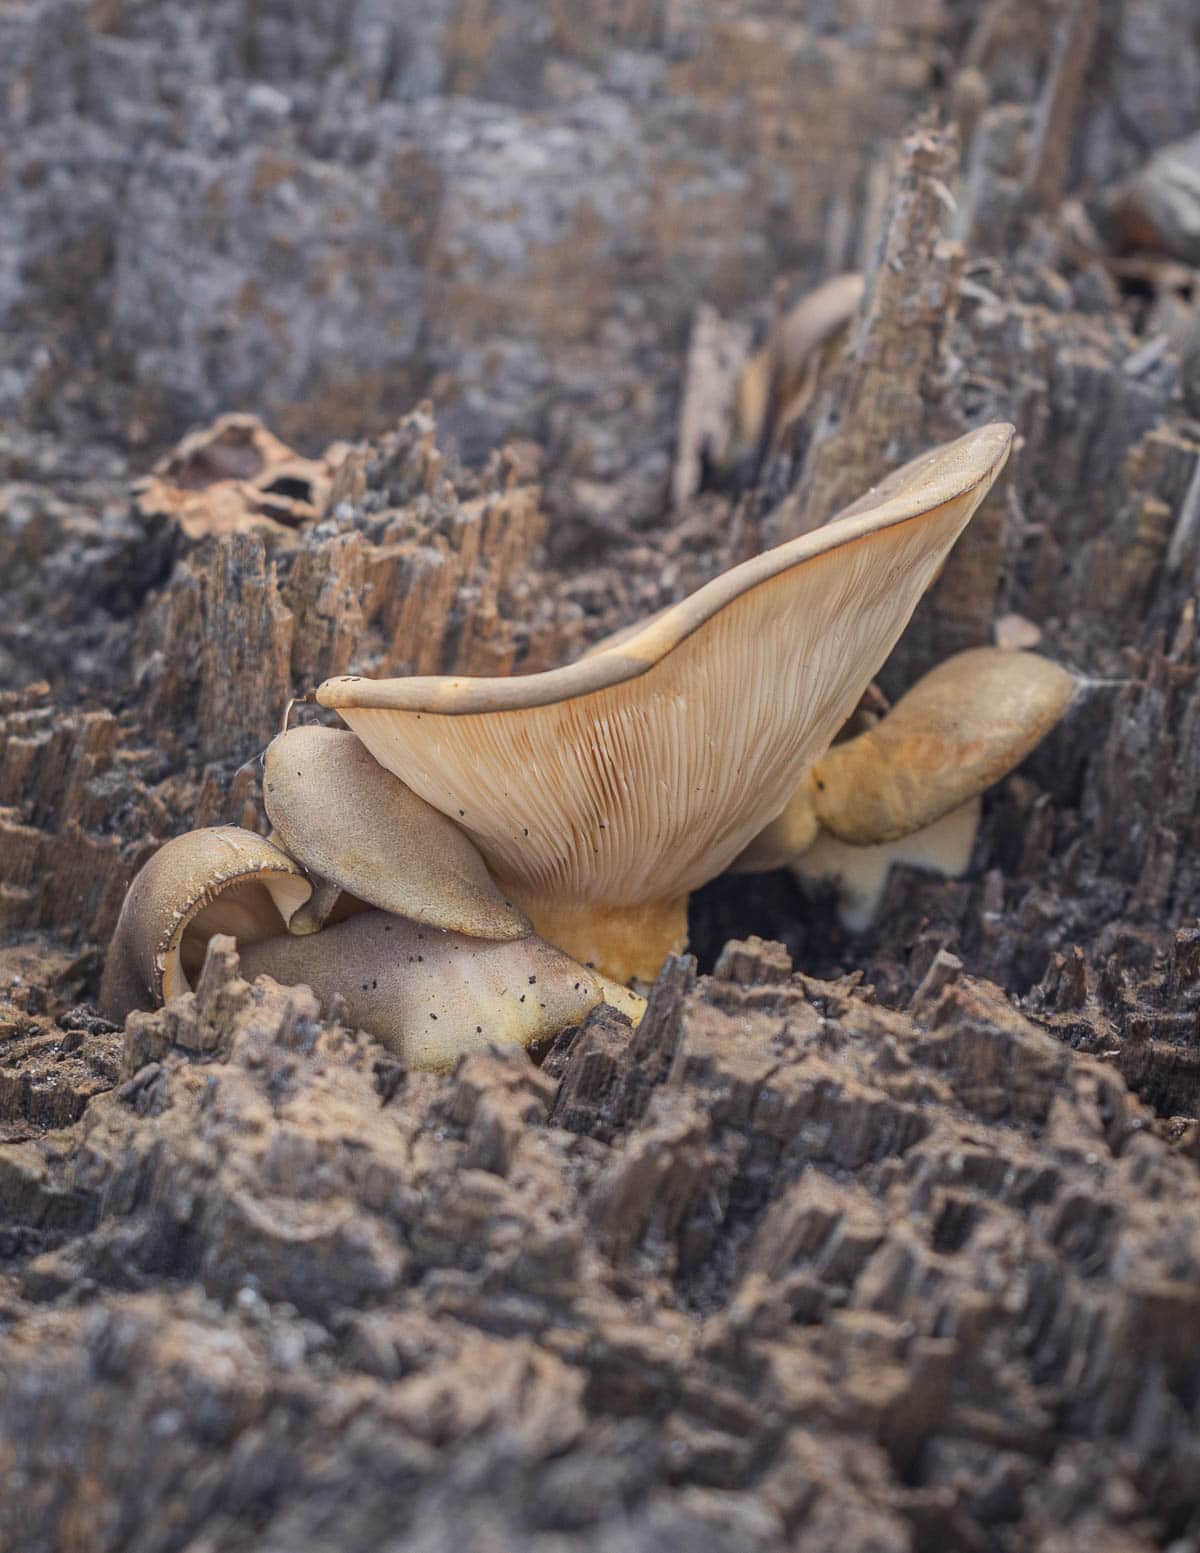 Late fall oyster mushrooms (Sarcomyxa serotina) growing on a cottonwood stump. 